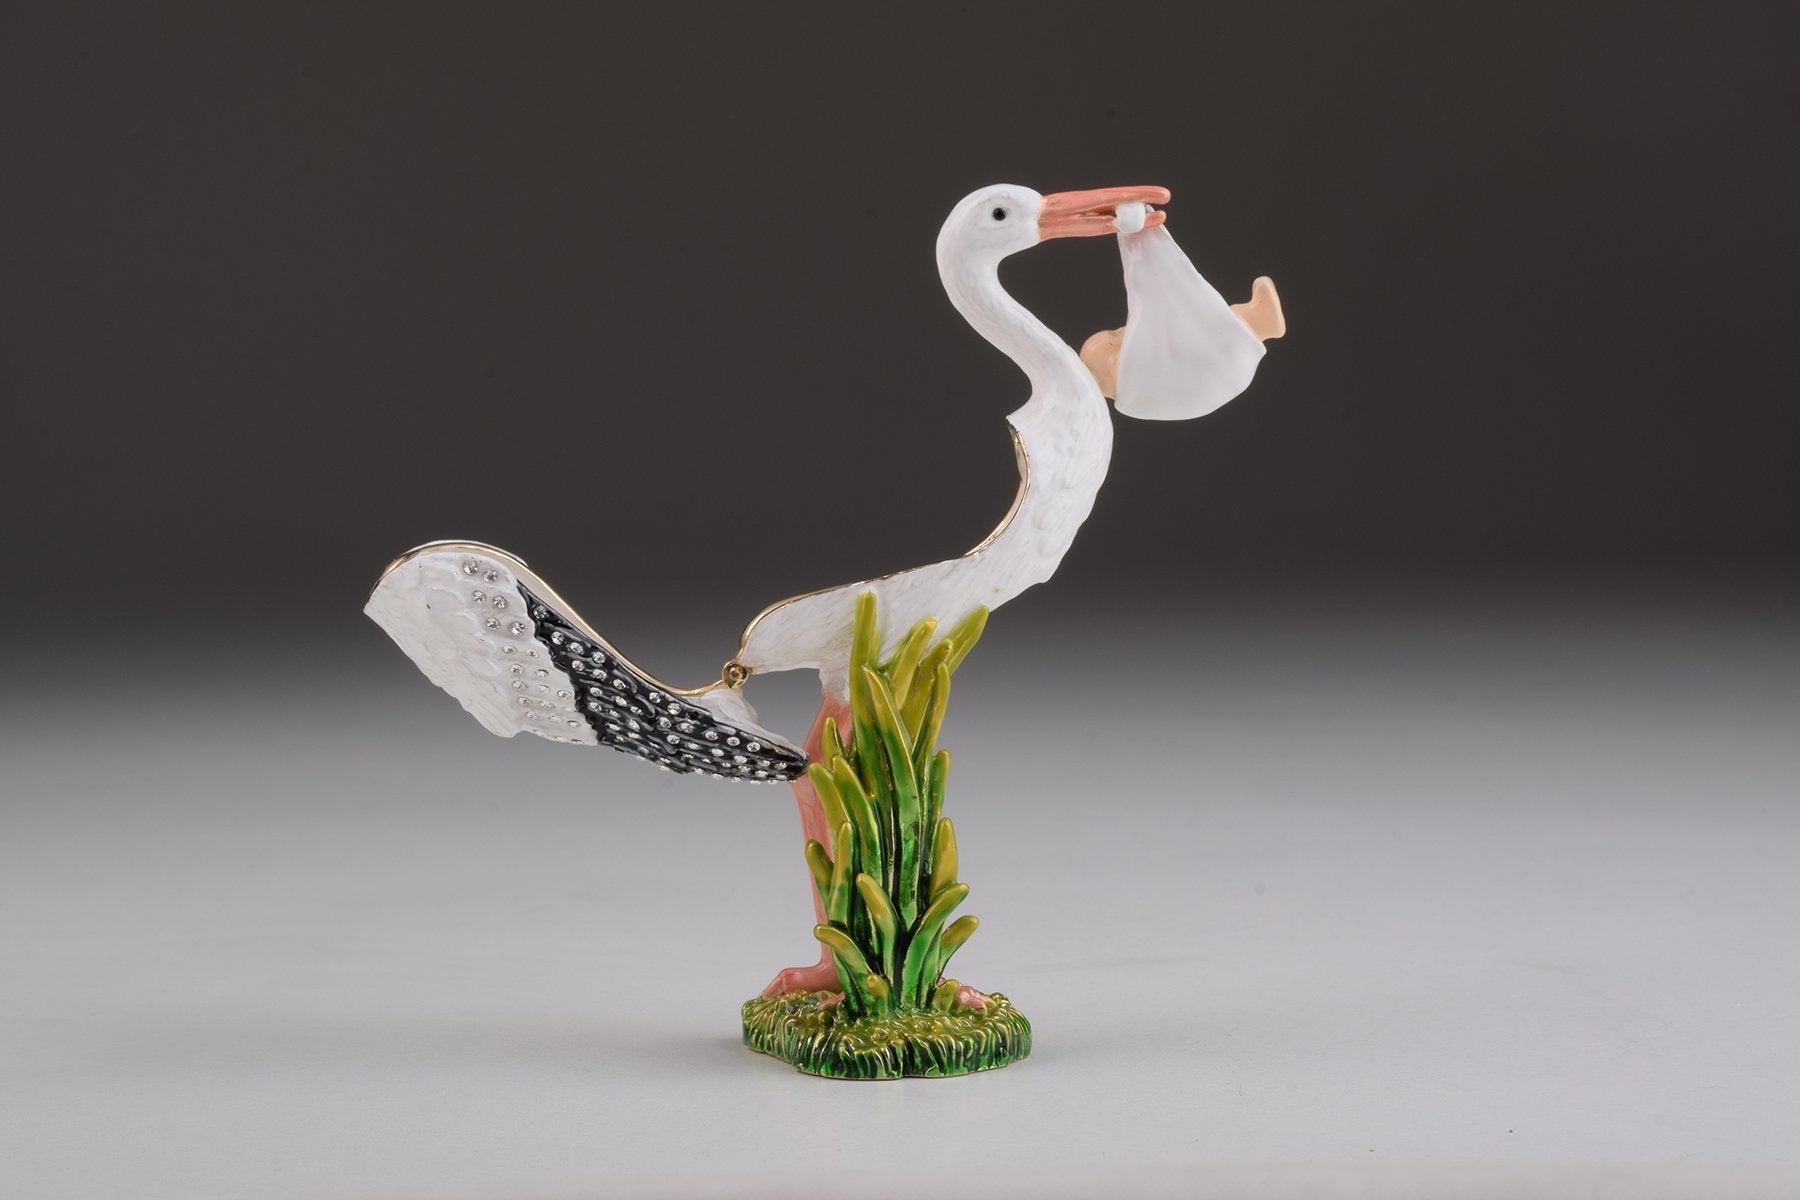 Keren Kopal White Stork Carring a Baby trinket box 99.00